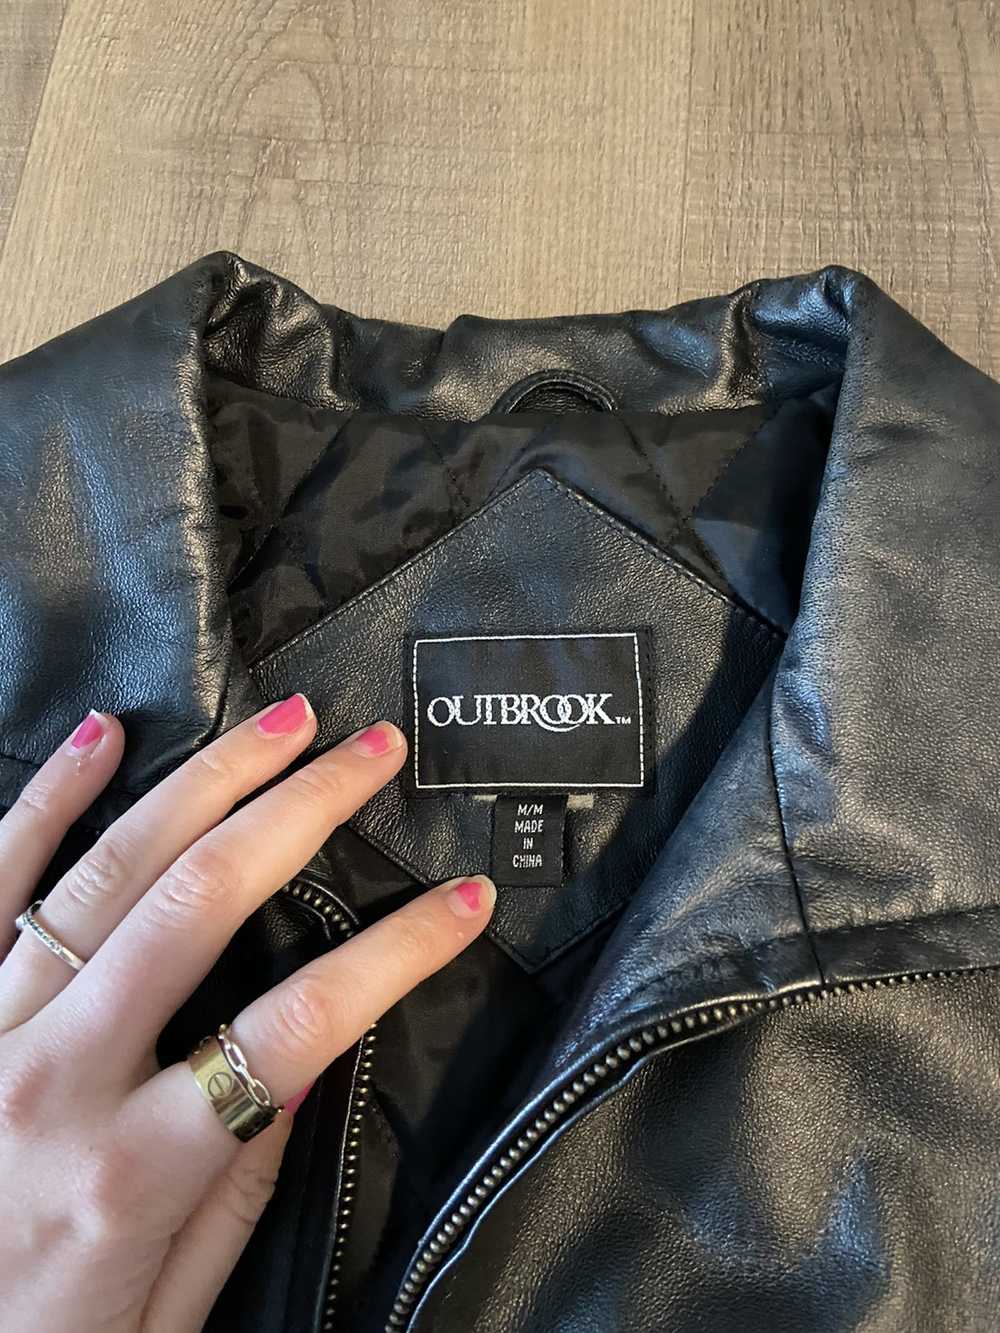 Leather Jacket × Vintage Vintage Outbrook Jacket - image 2